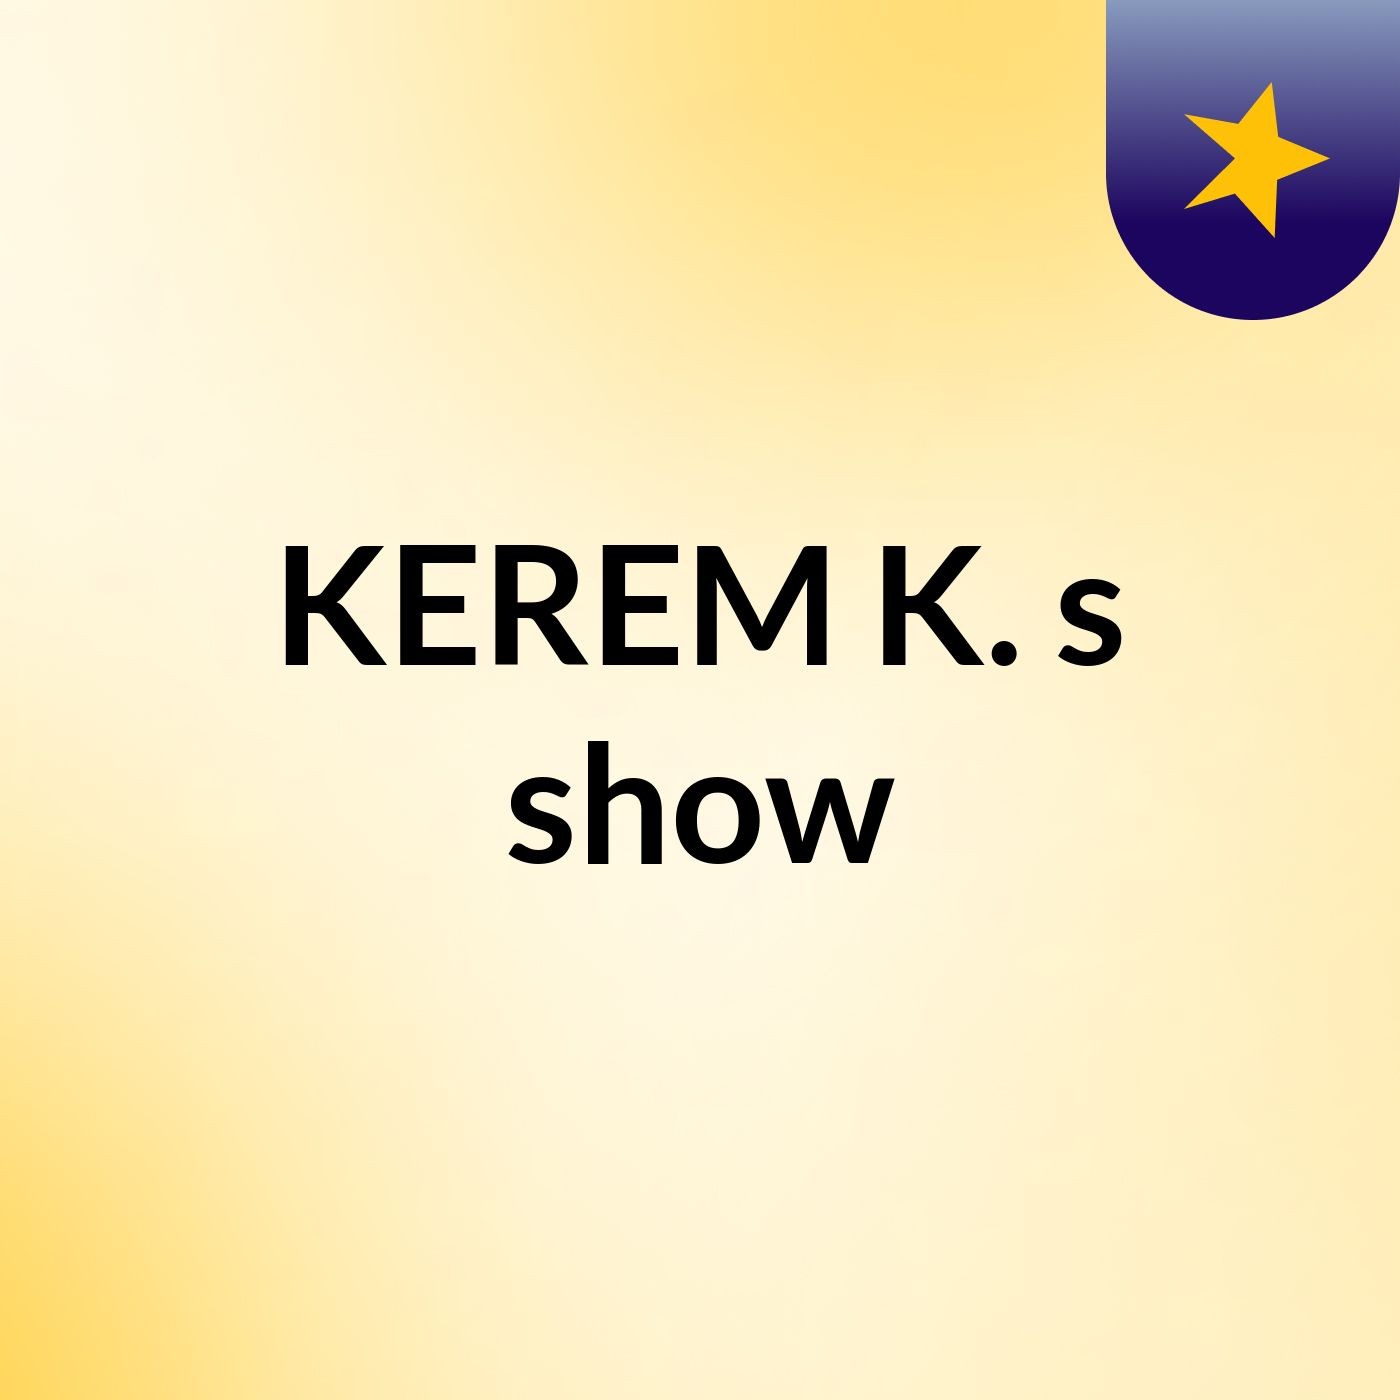 KEREM K.'s show